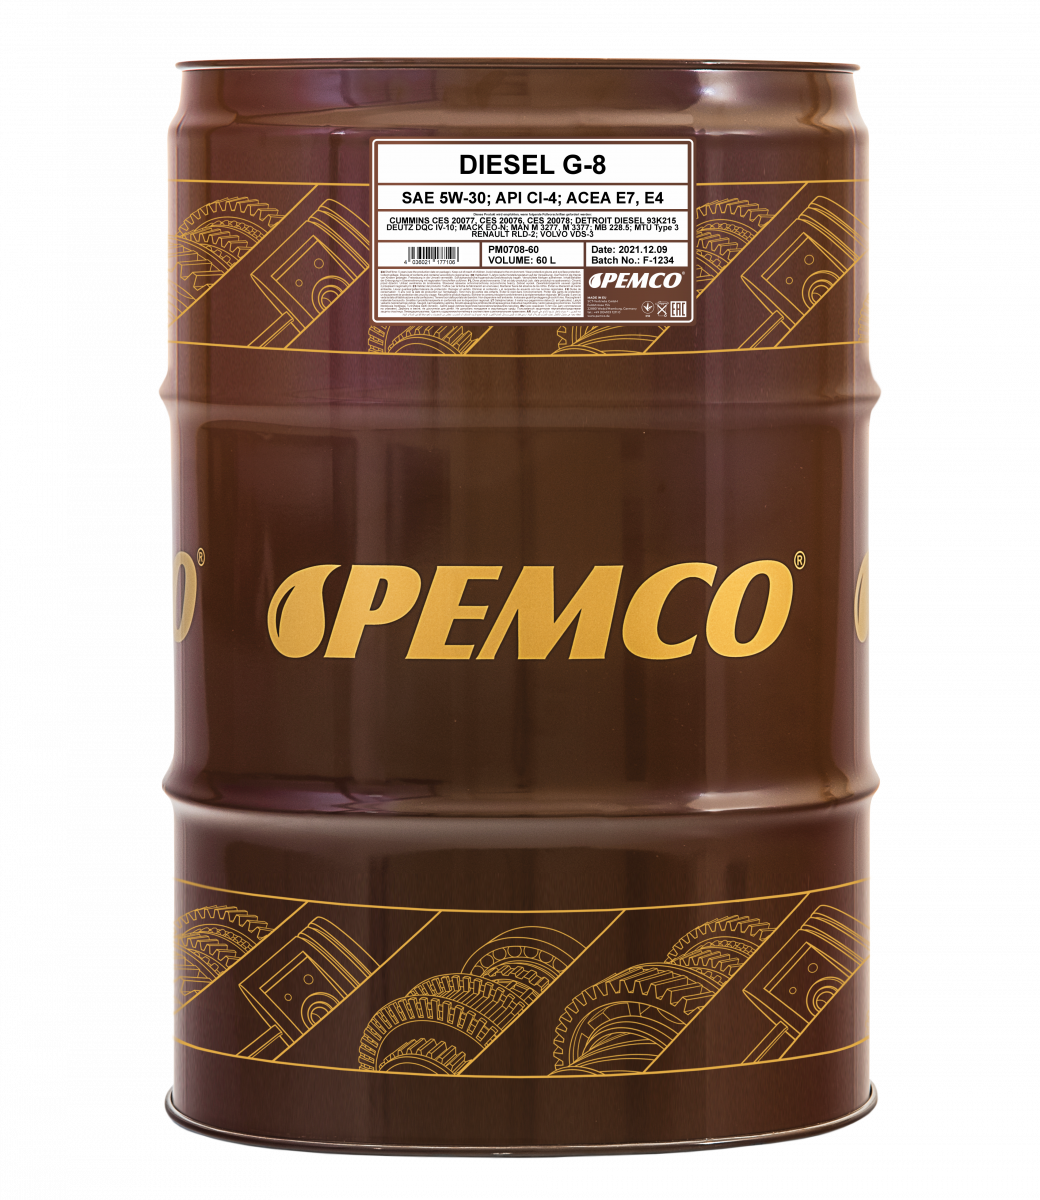 Моторное масло PEMCO DIESEL G-8 UHPD 5W-30 CL-4 синтетическое, 60л (PM0708-60)